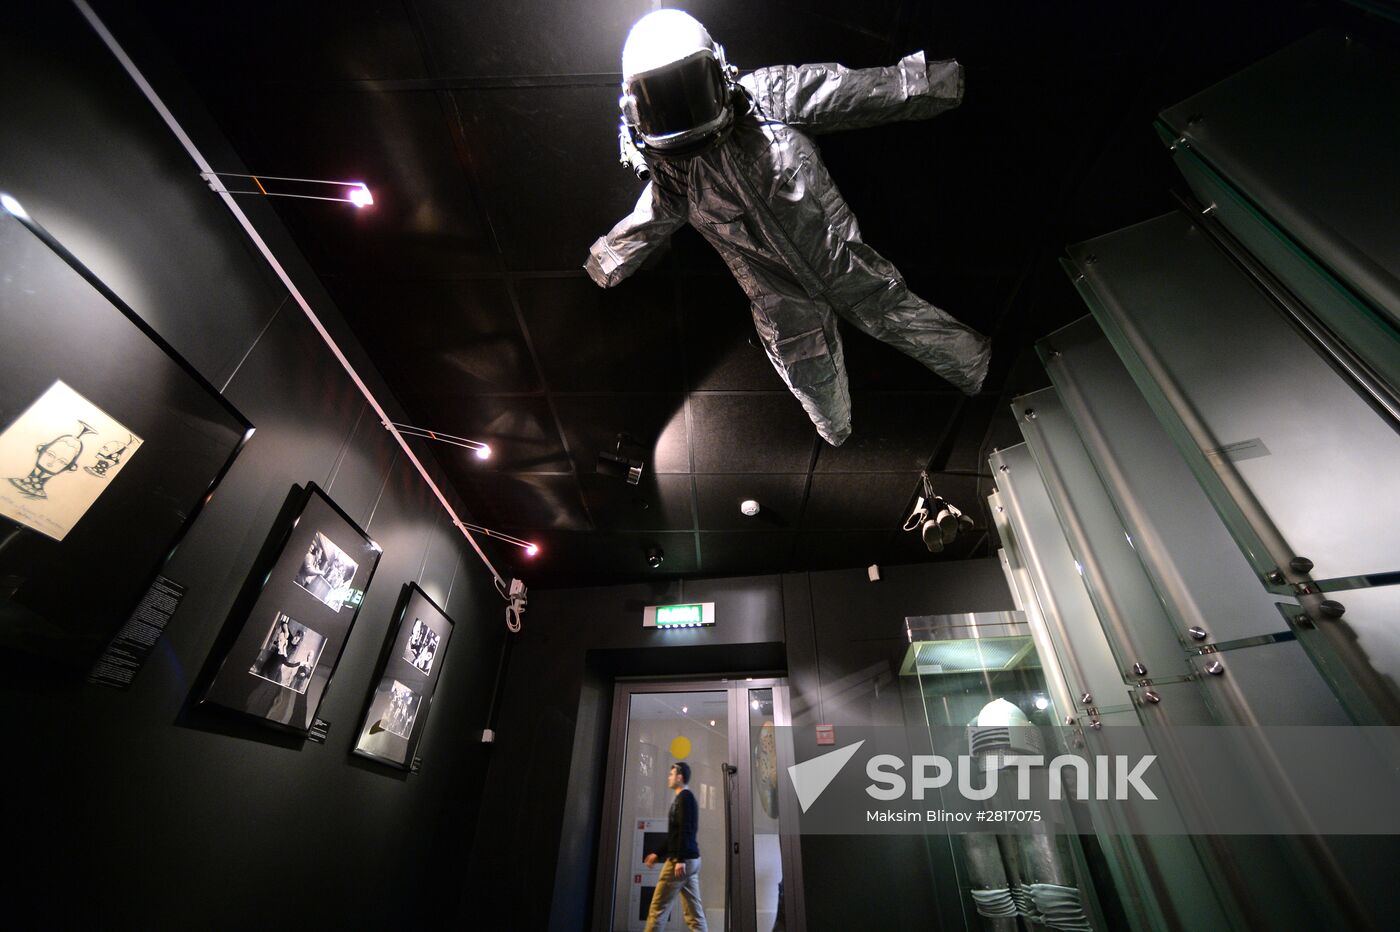 Earth-Cassiopeia exhibition opens at Cosmonautics Museum